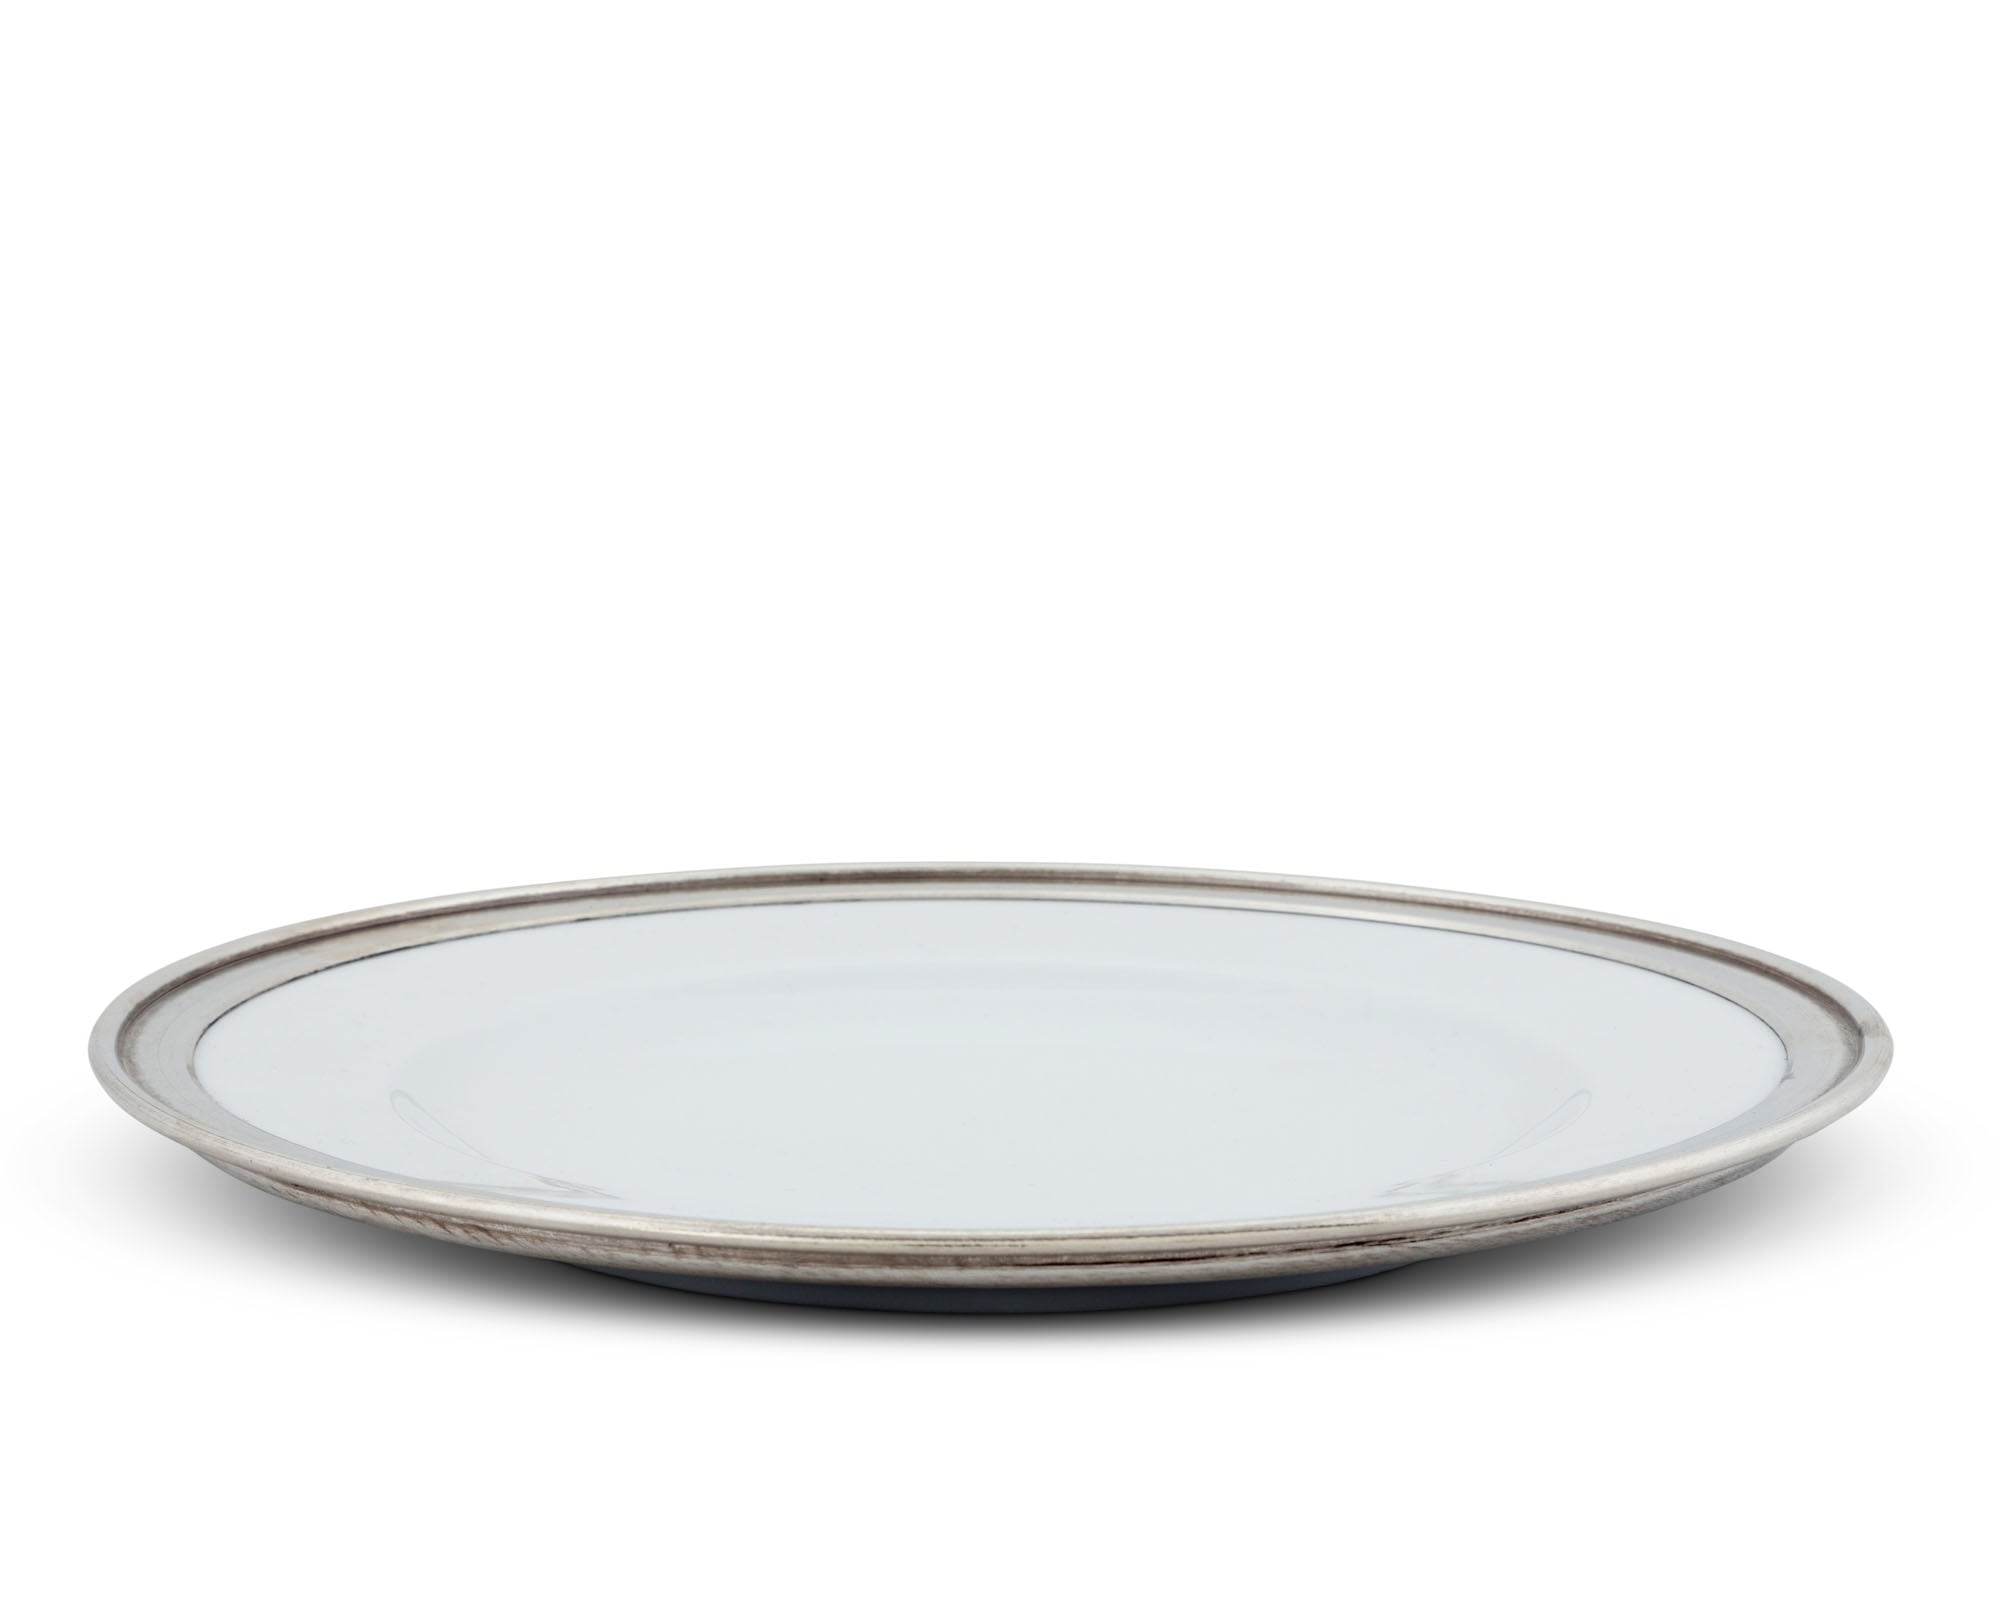 Vagabond House Classic Pewter Rim Dinner Plate Product Image